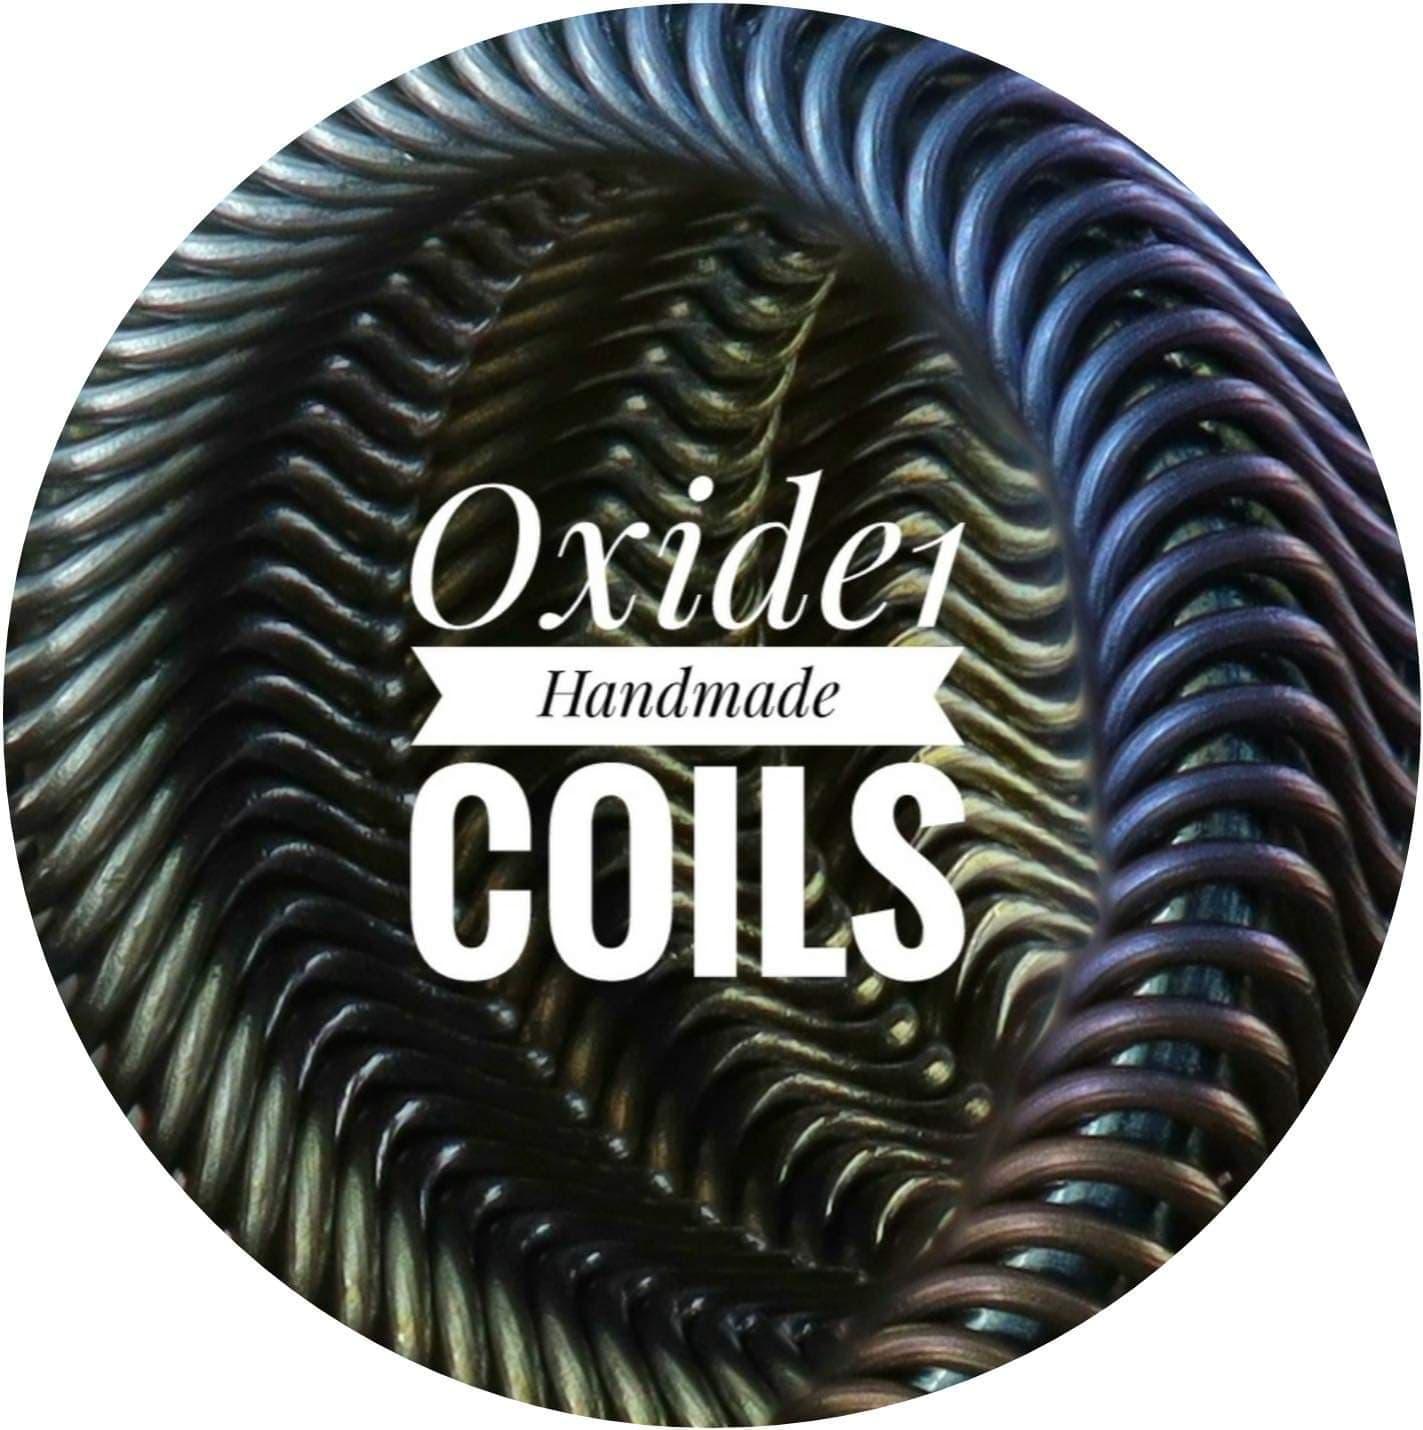 Oxide1 - Series Coils, [product_vandor]